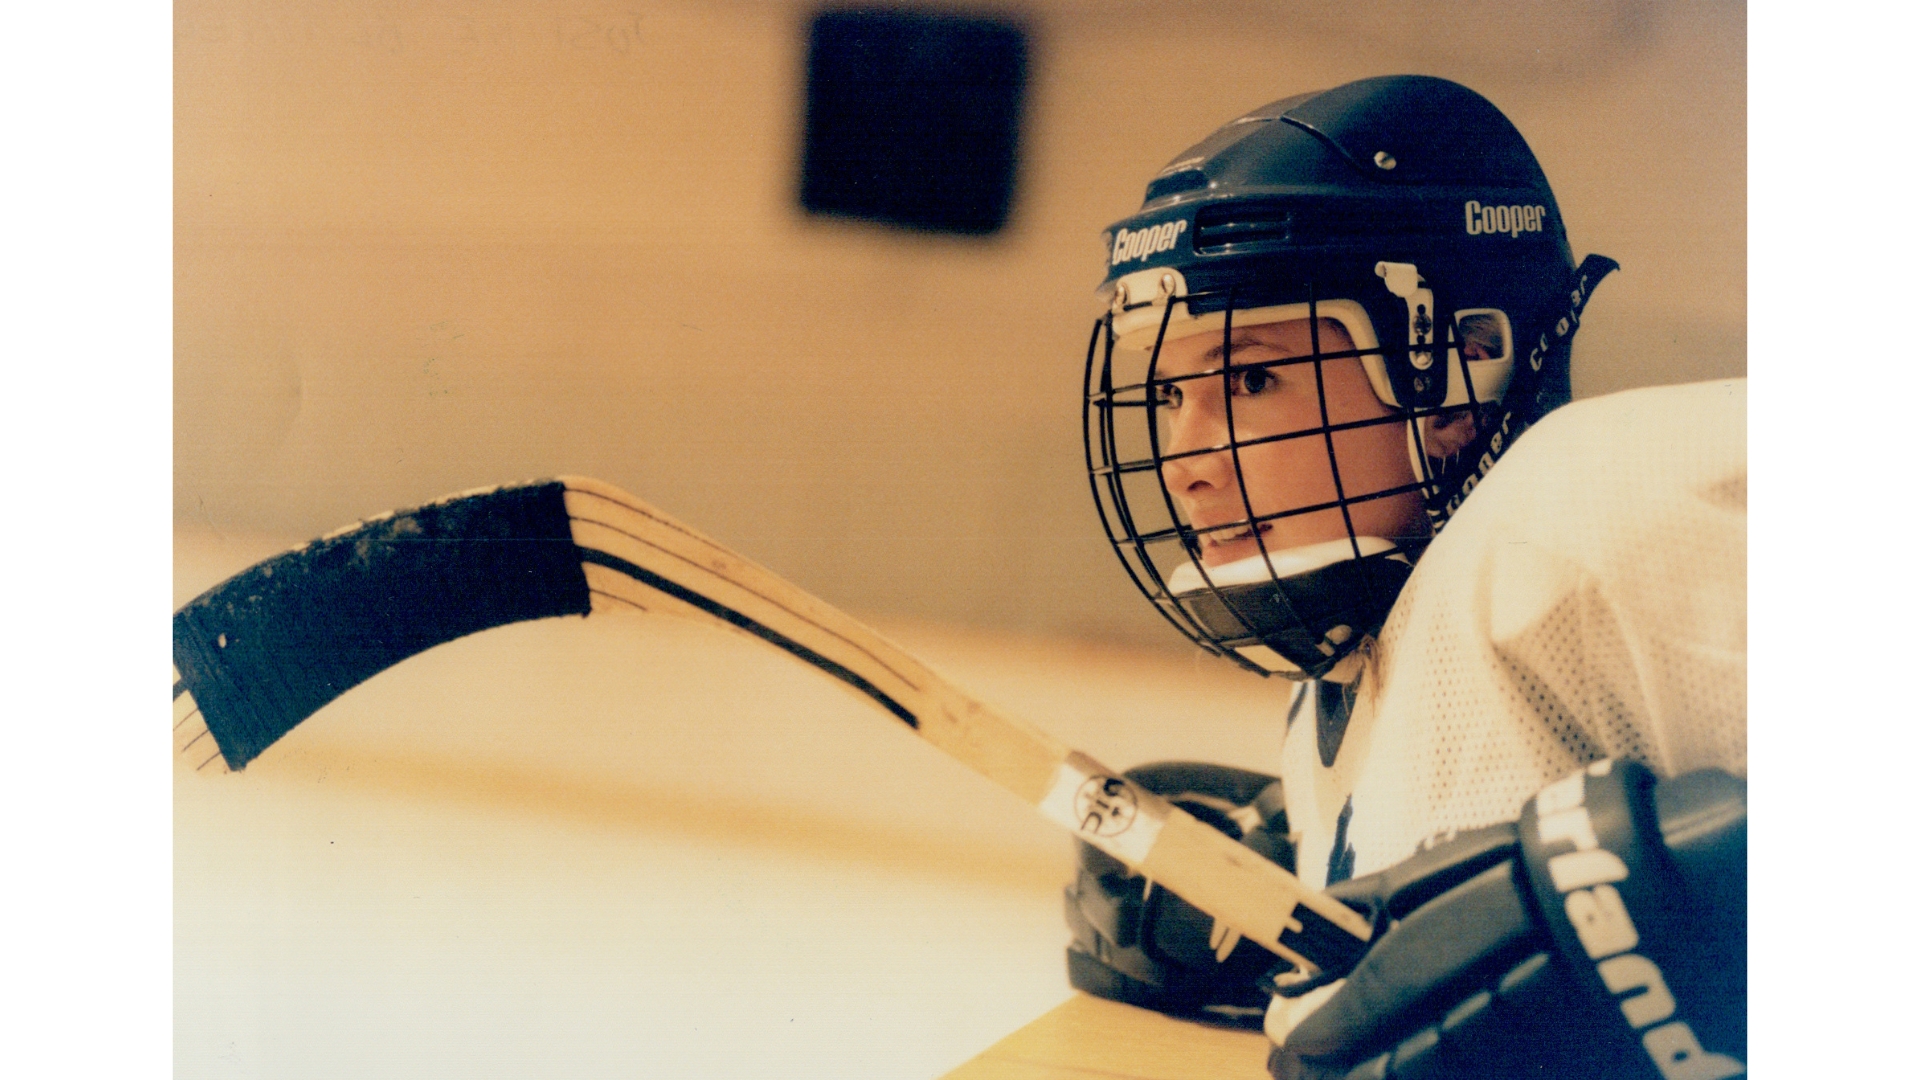 Justine Blainey: The teenage girl who broke ice hockey's glass ceiling